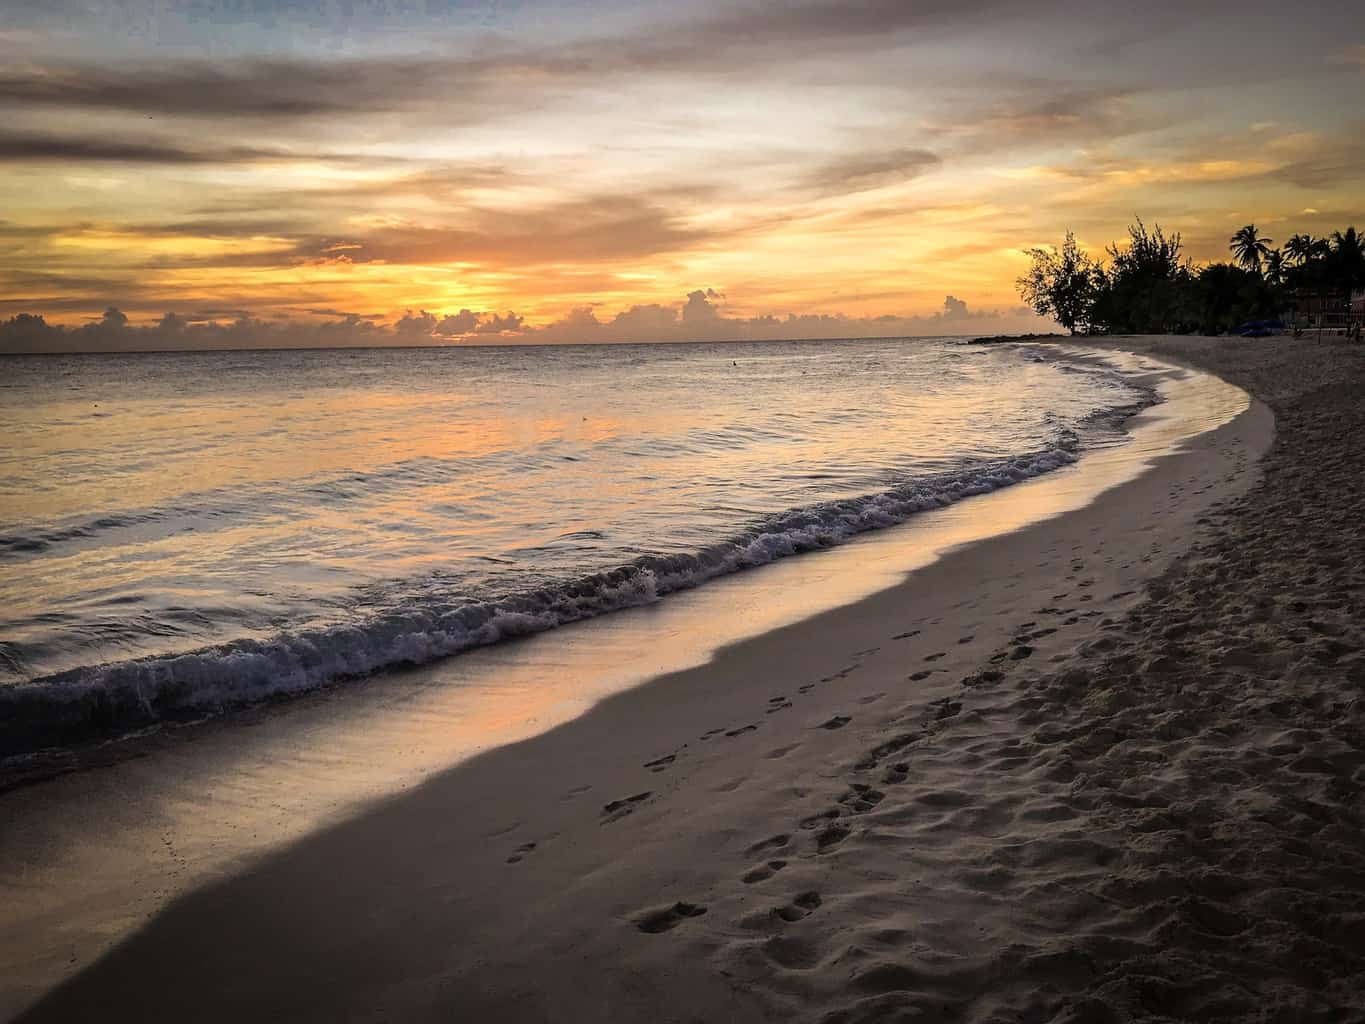  Dover Beach, Barbados - iPhone travel photography 